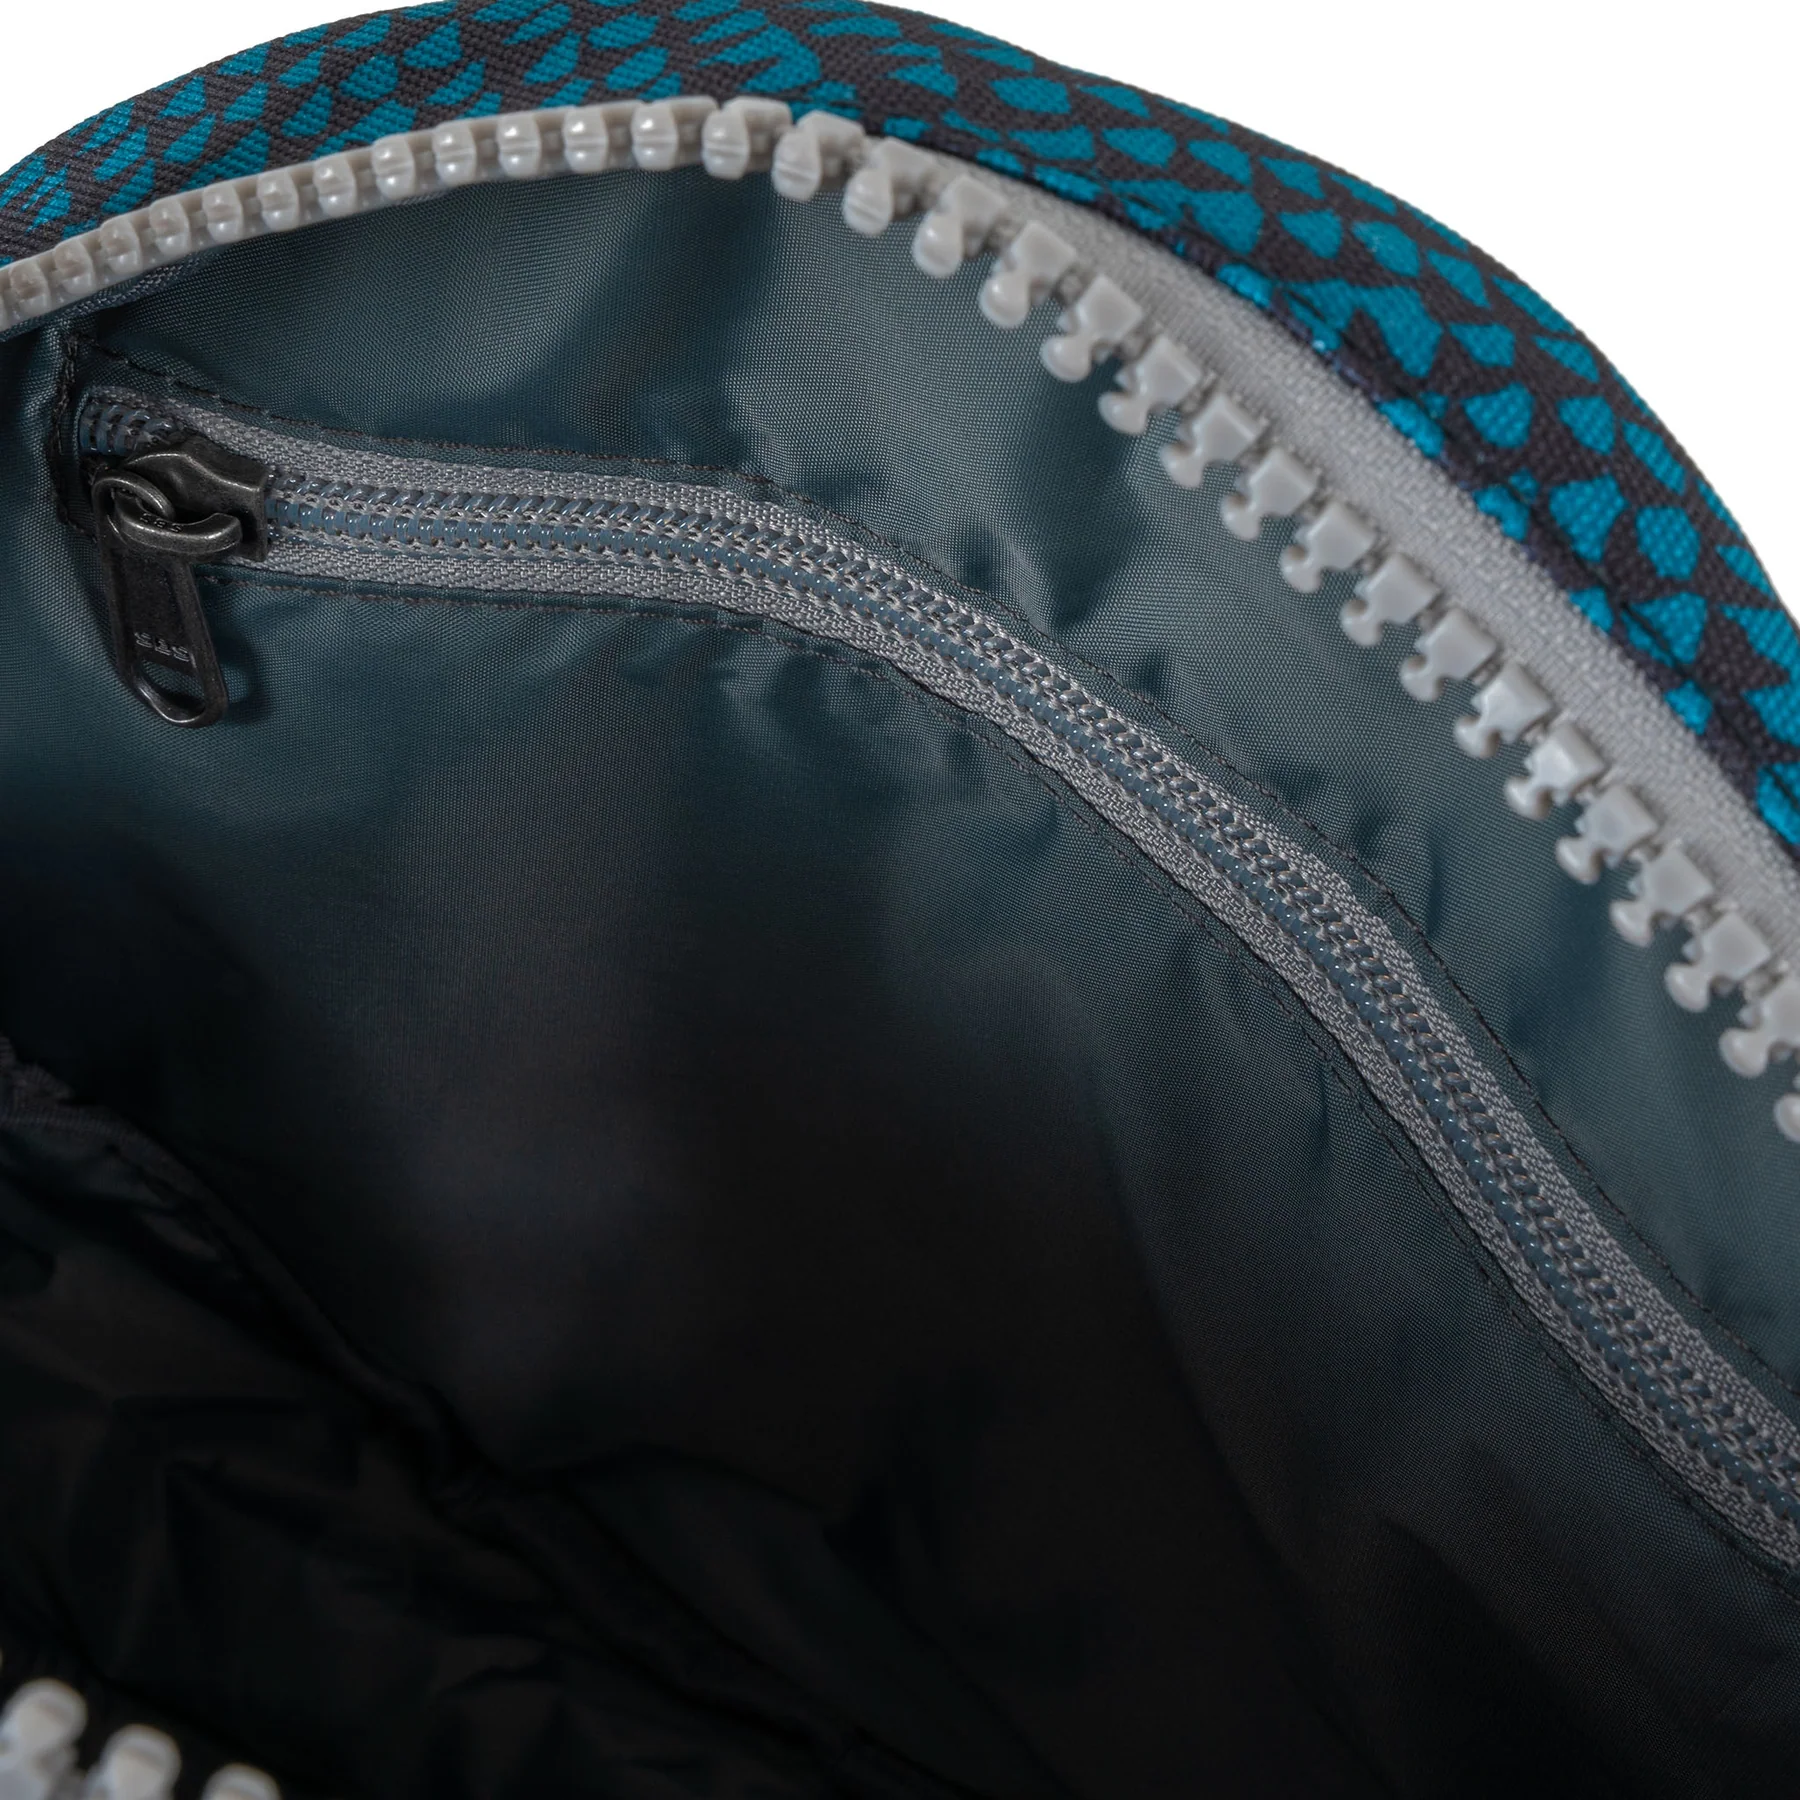 Paddington B (Recycled Canvas) Crossbody Bag Small | Deep Teal Snake inside detail